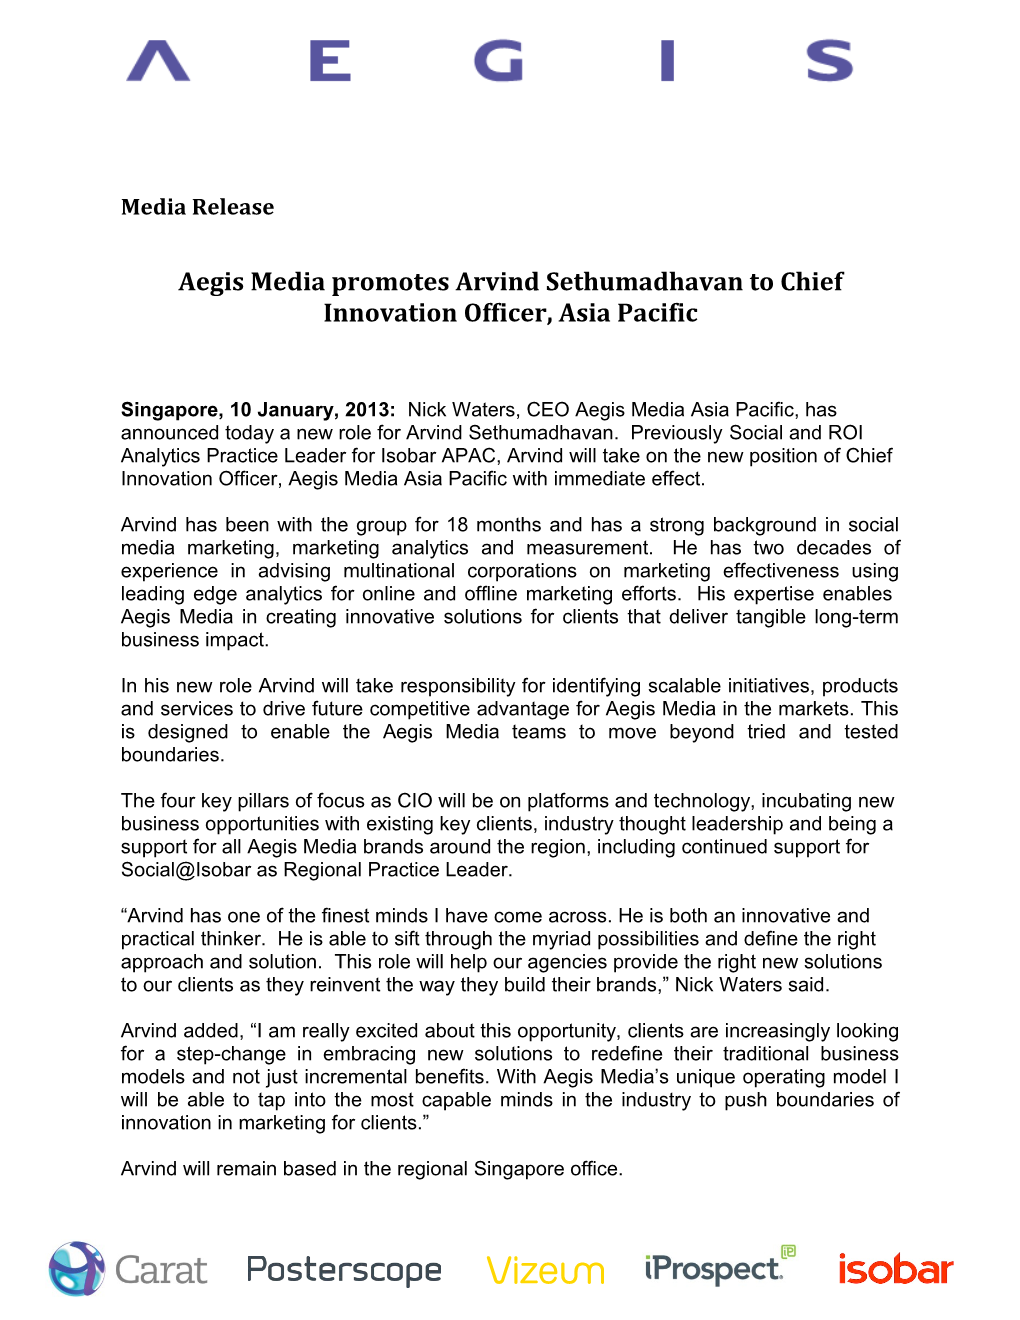 Aegis Media Promotes Arvind Sethumadhavan to Chief Innovation Officer, Asia Pacific